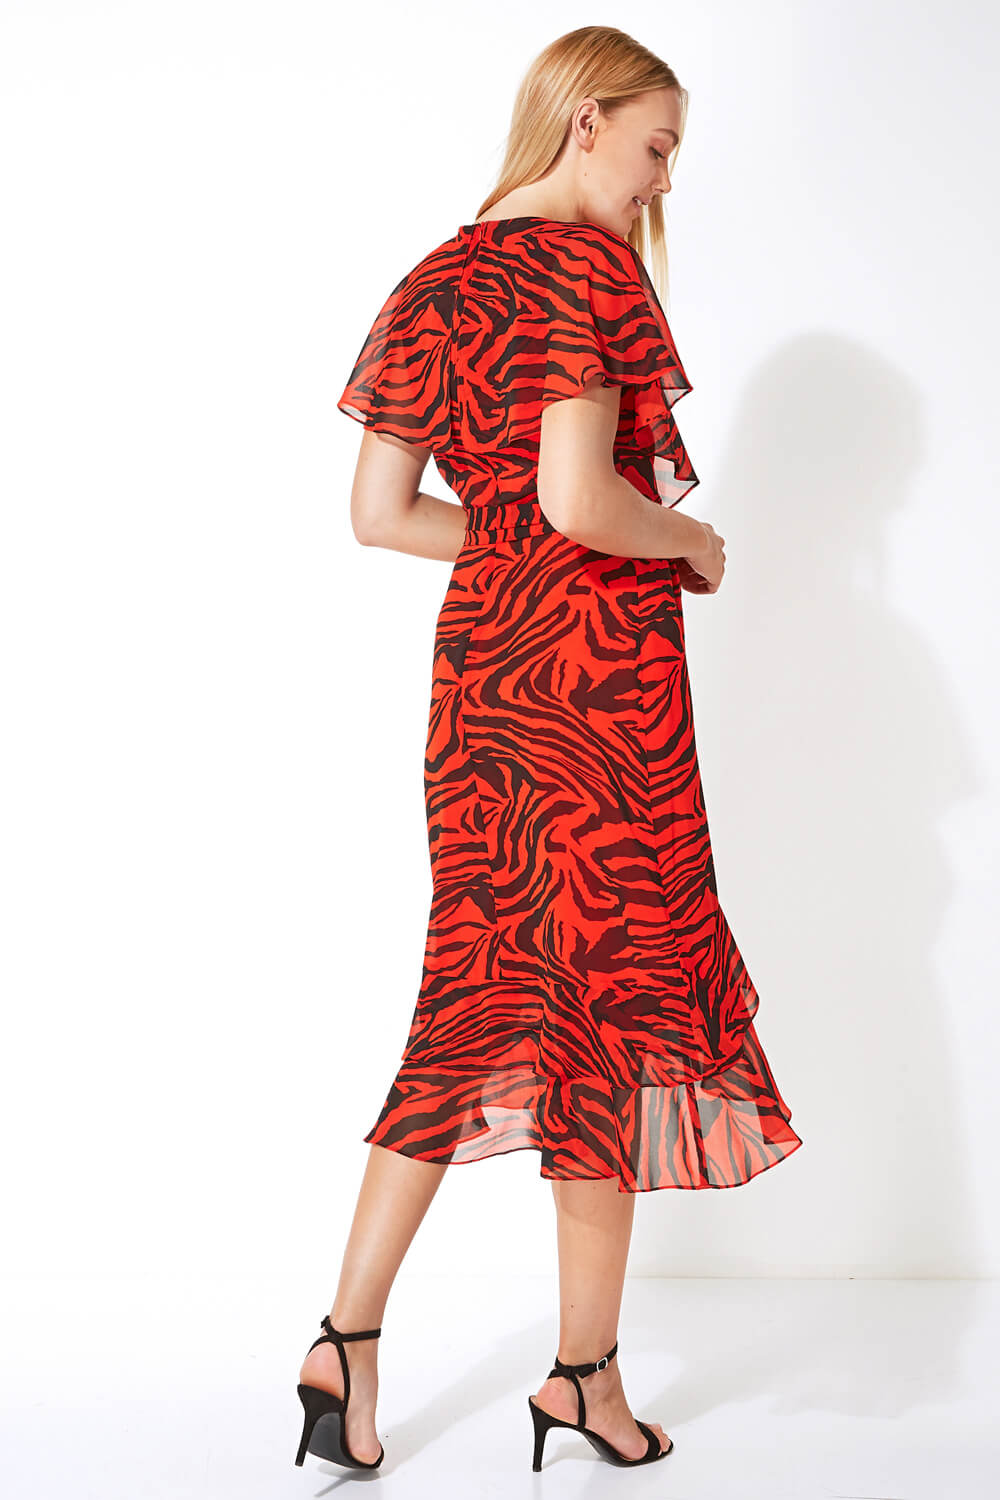 ORANGE Tiger Print Tie Waist Chiffon Midi Dress, Image 3 of 5